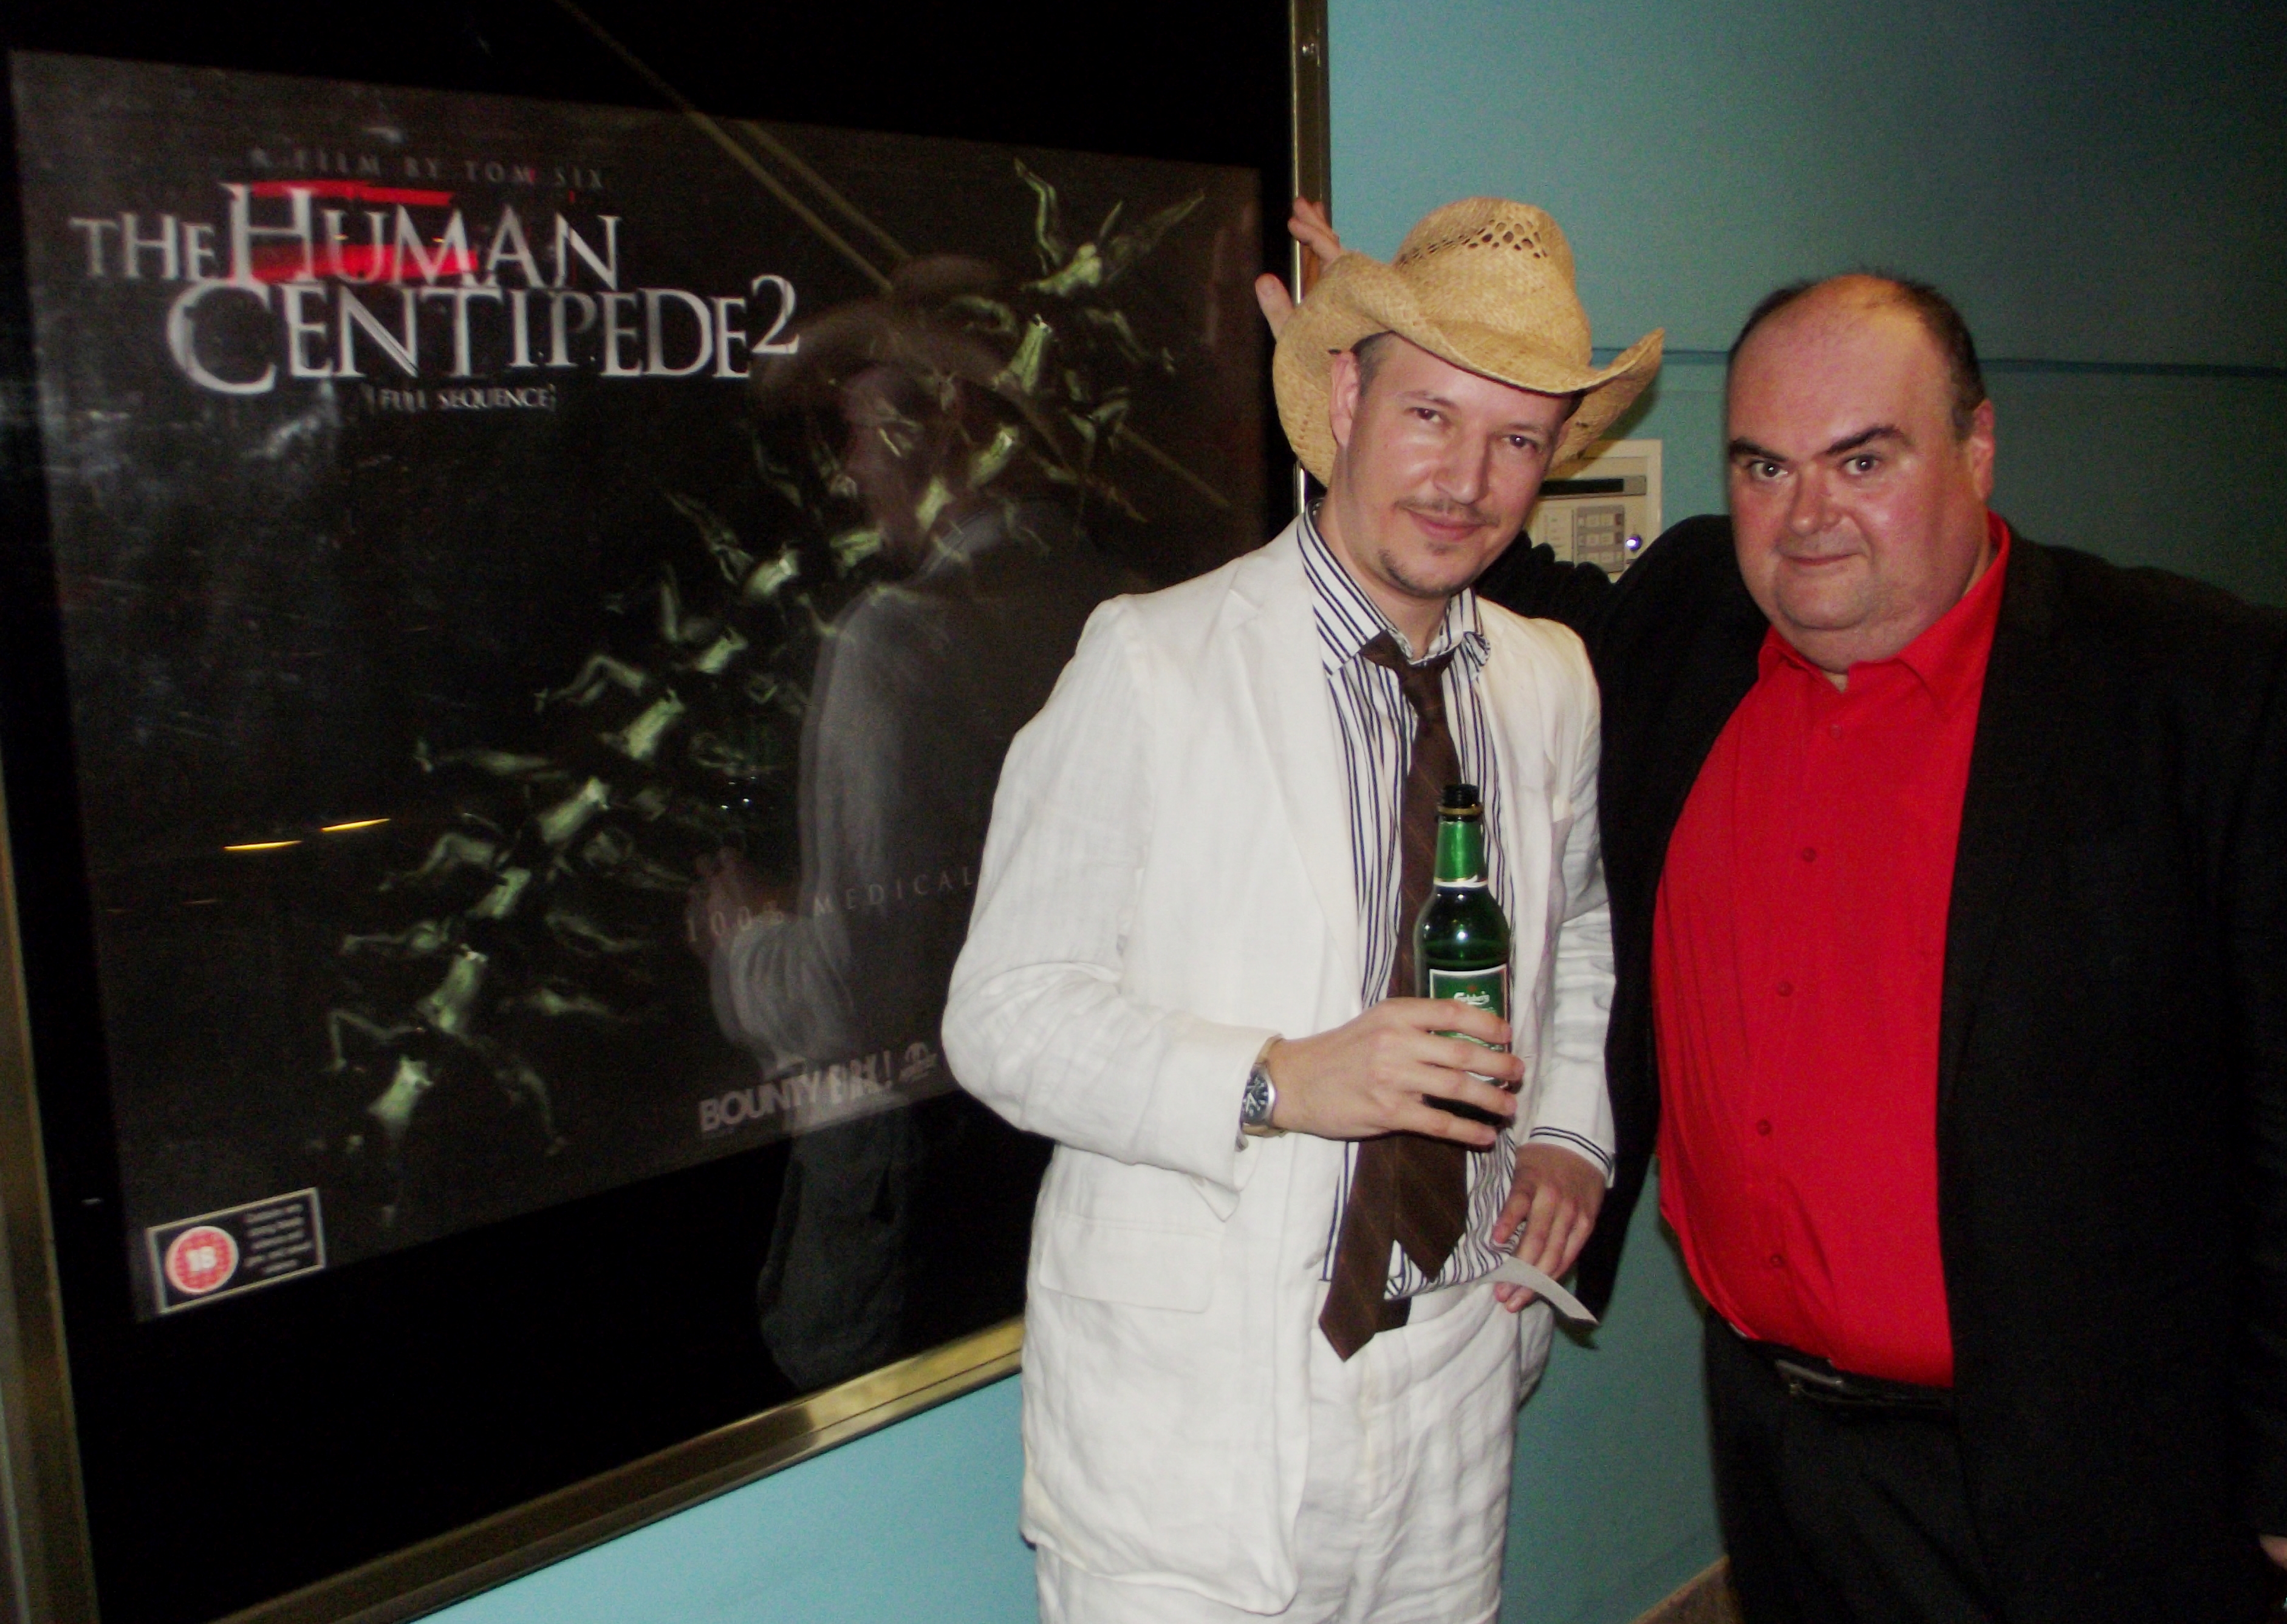 Dominic Borrelli & Director of Human Centipede 2, Tom Six